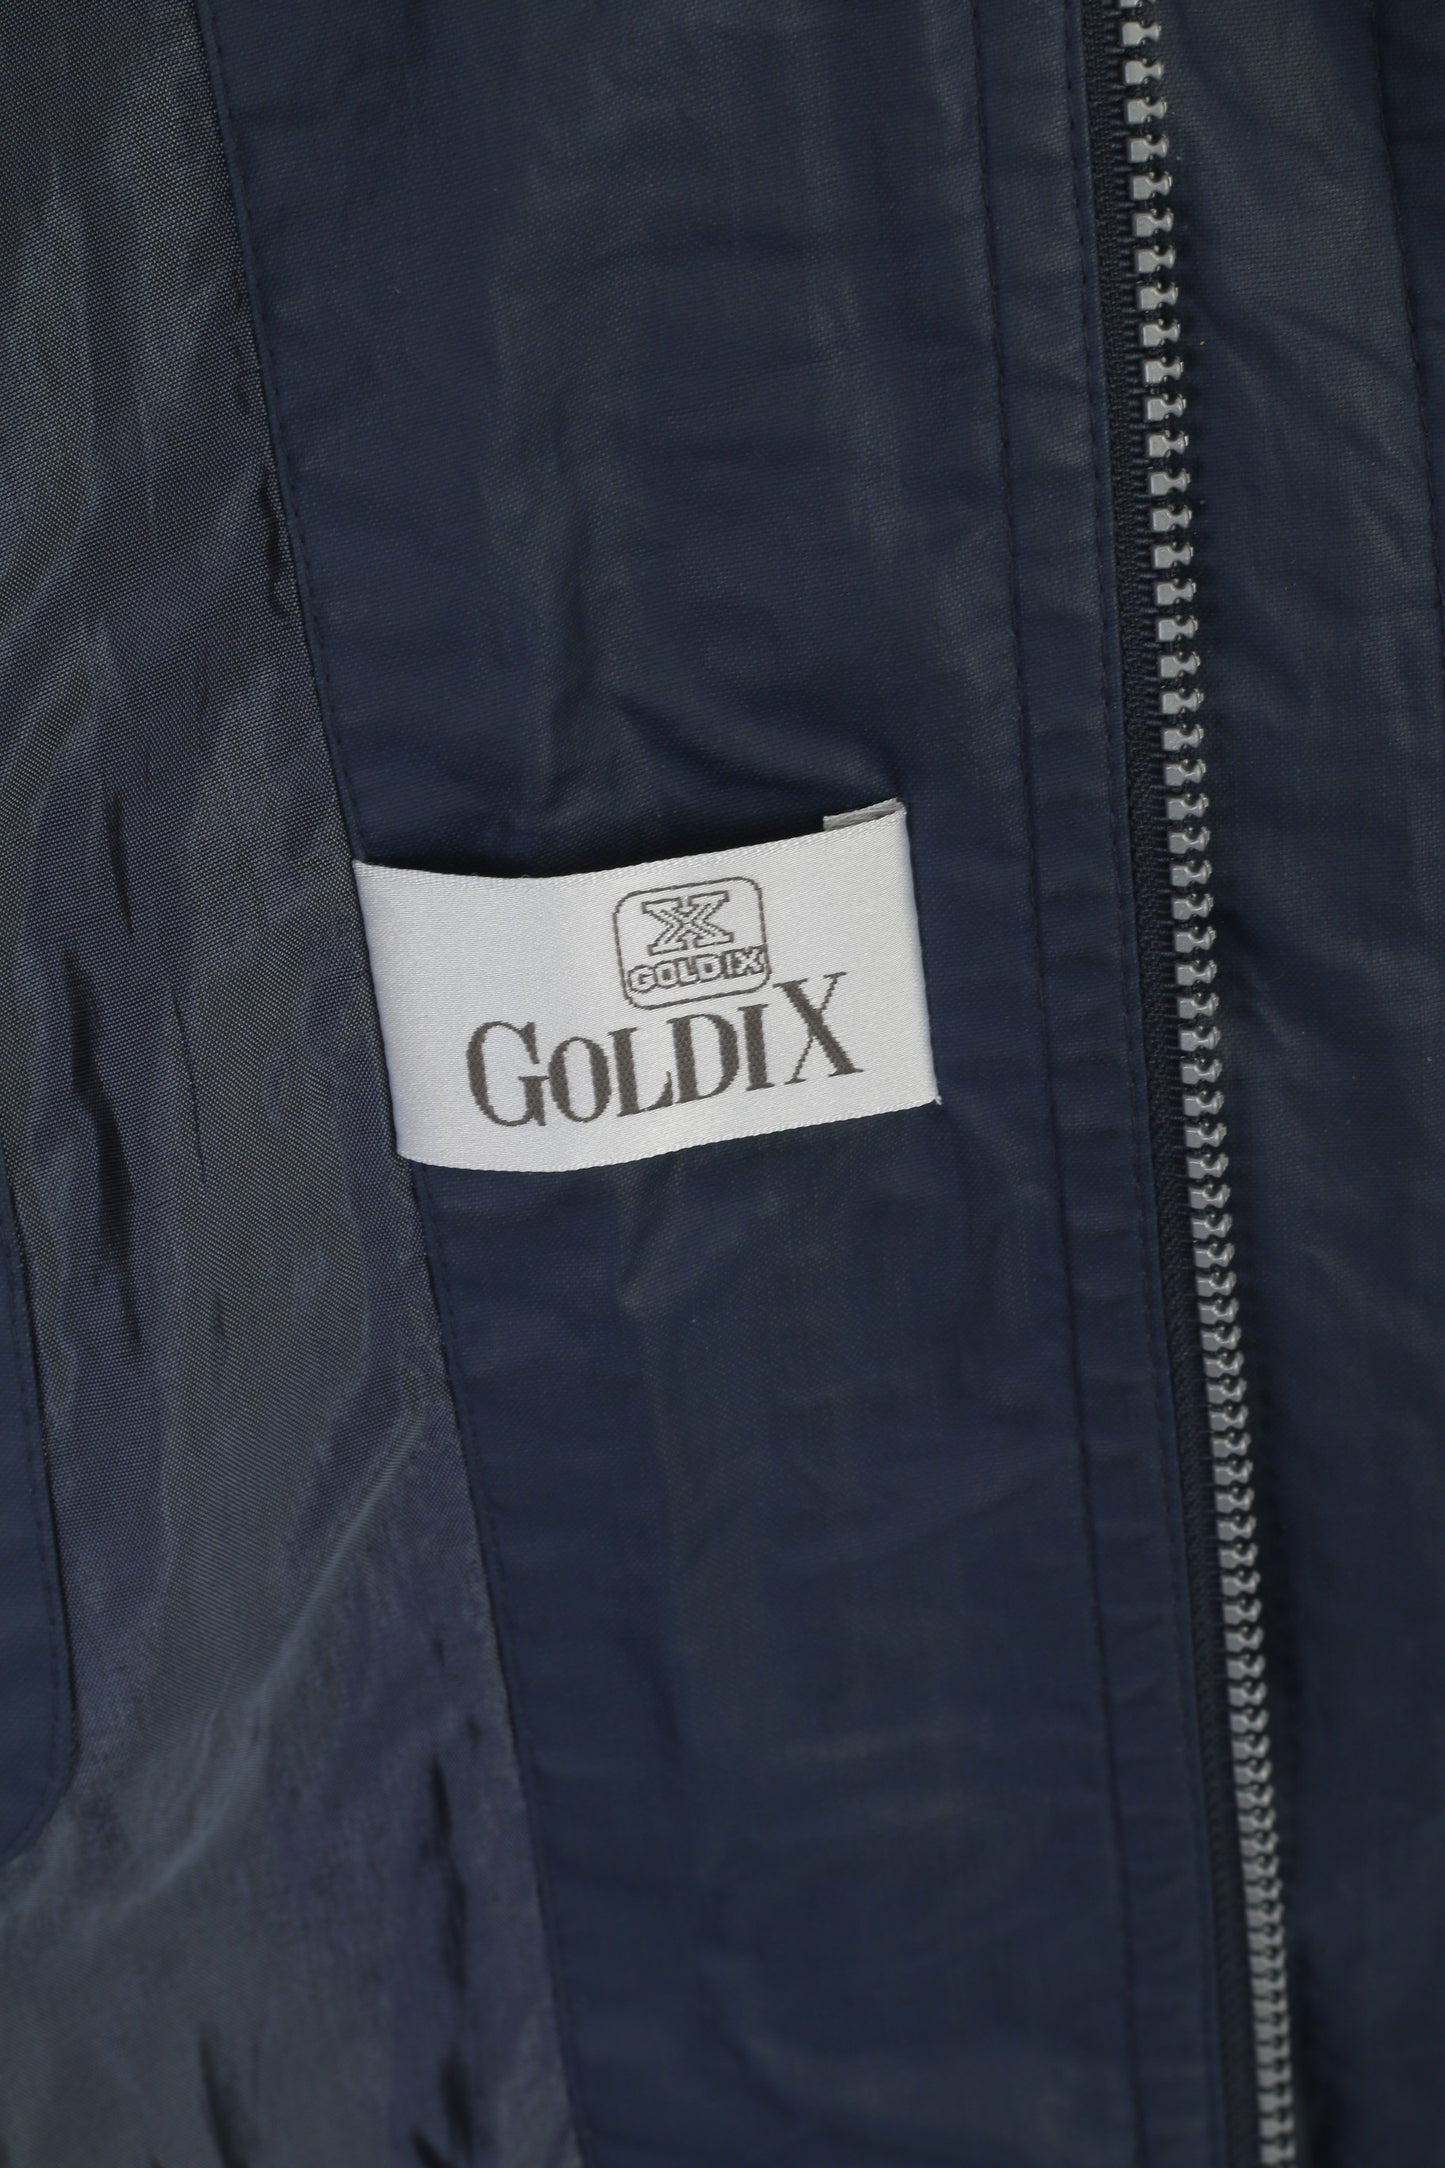 Goldix Surf & Co Women 16 42 XL Coat Navy Cotton Shoulder Pads Vintage Zip Up Top